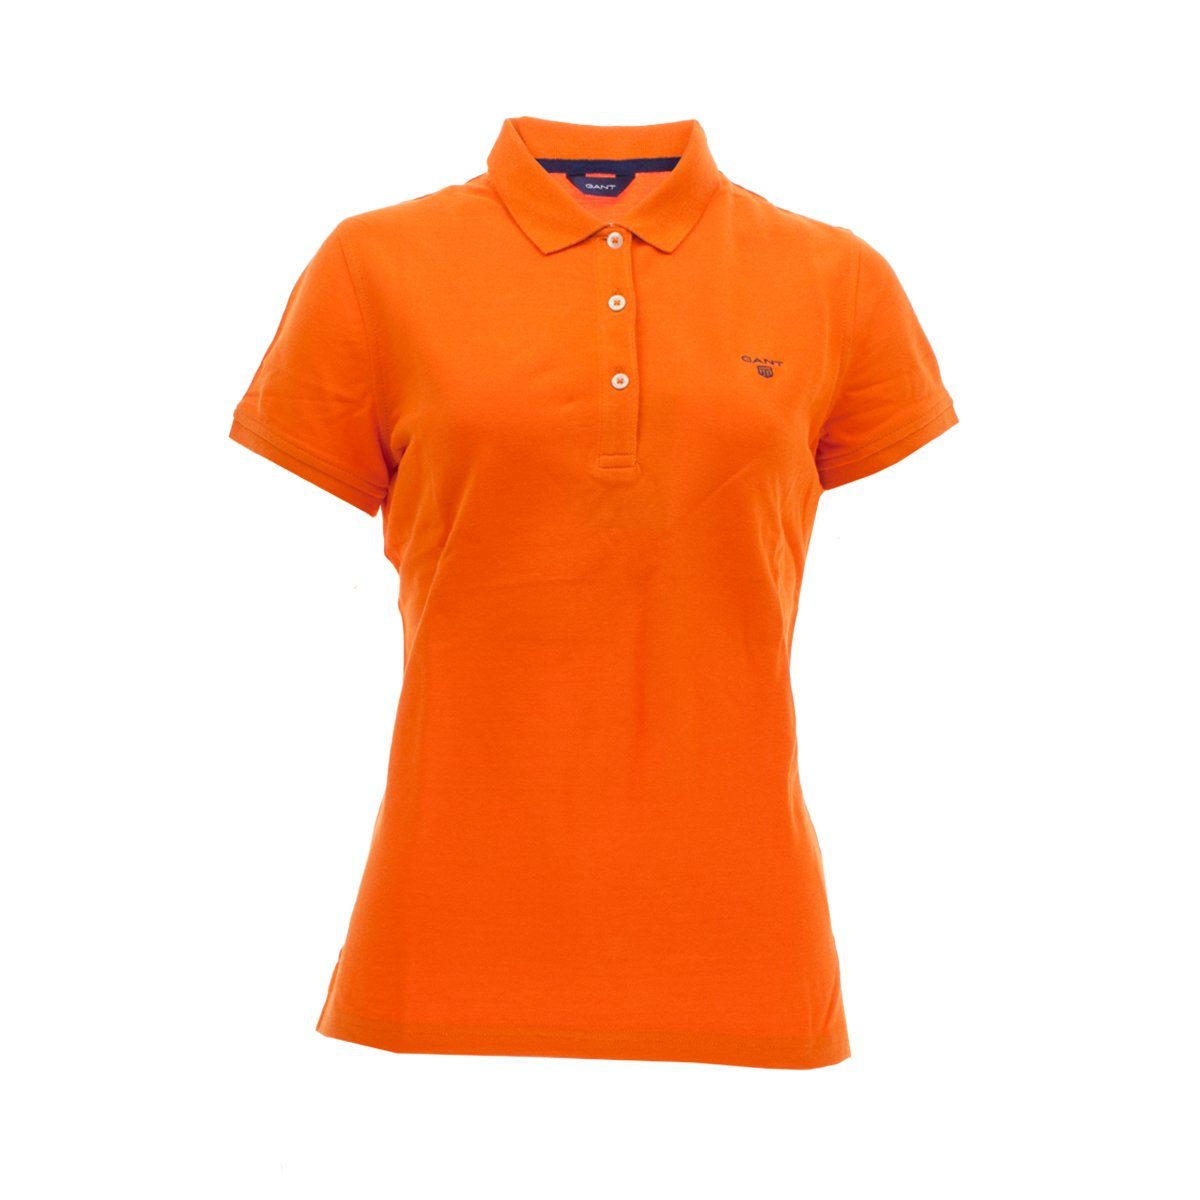 Damen Russet-Orange(806) Kurzarmshirt 409504 Gant Poloshirt